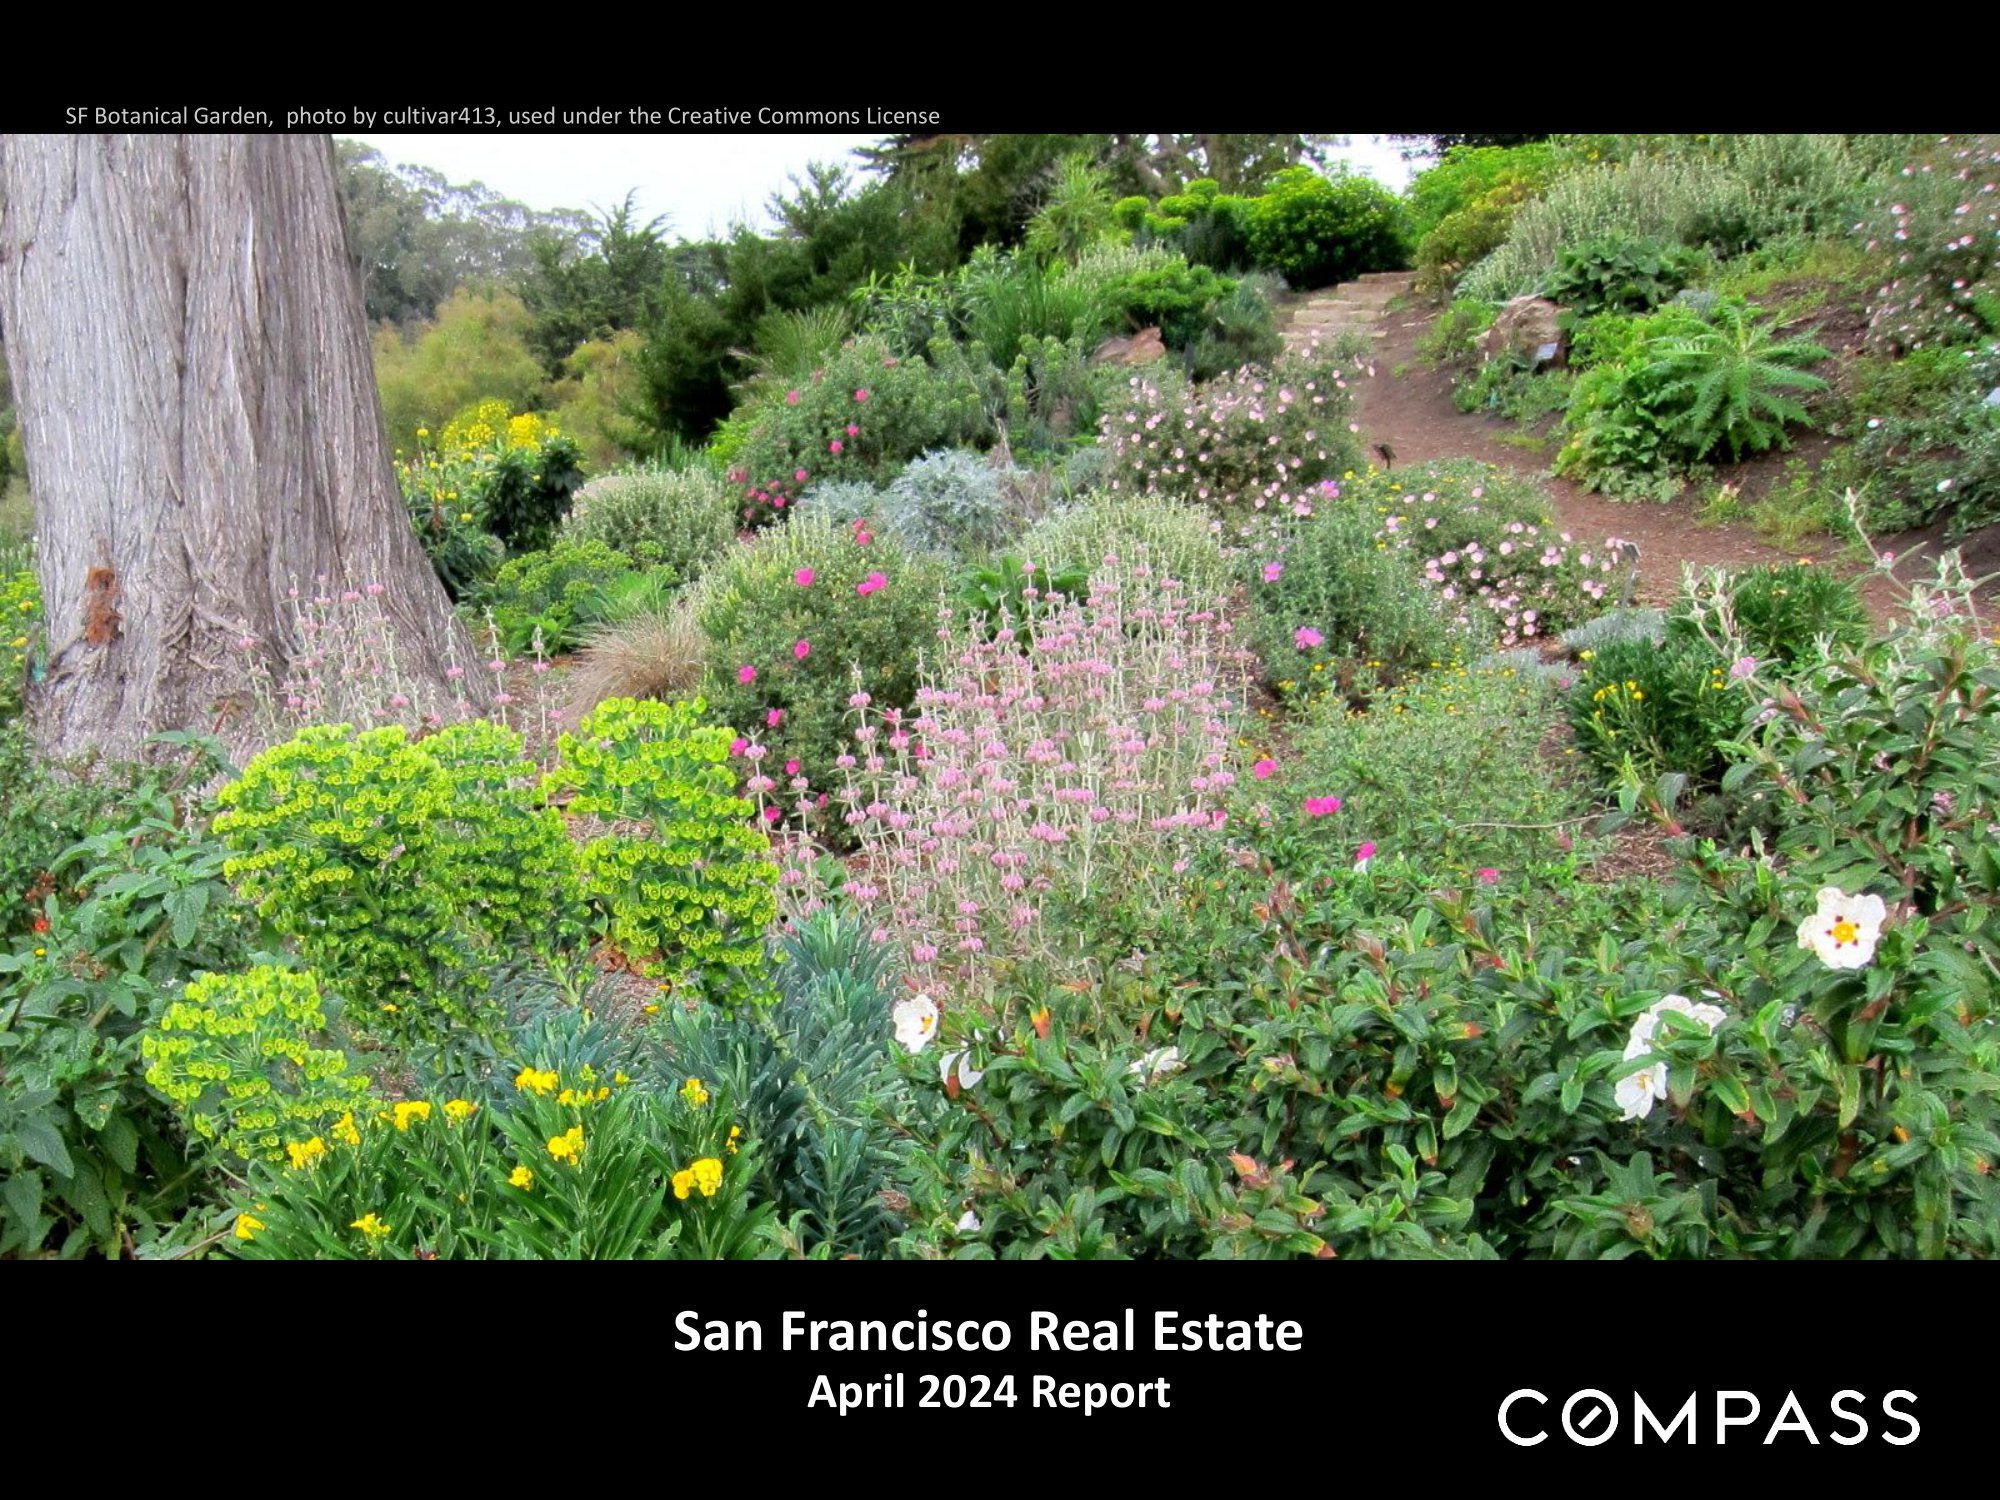 San Francisco Real Estate April 2024 Report